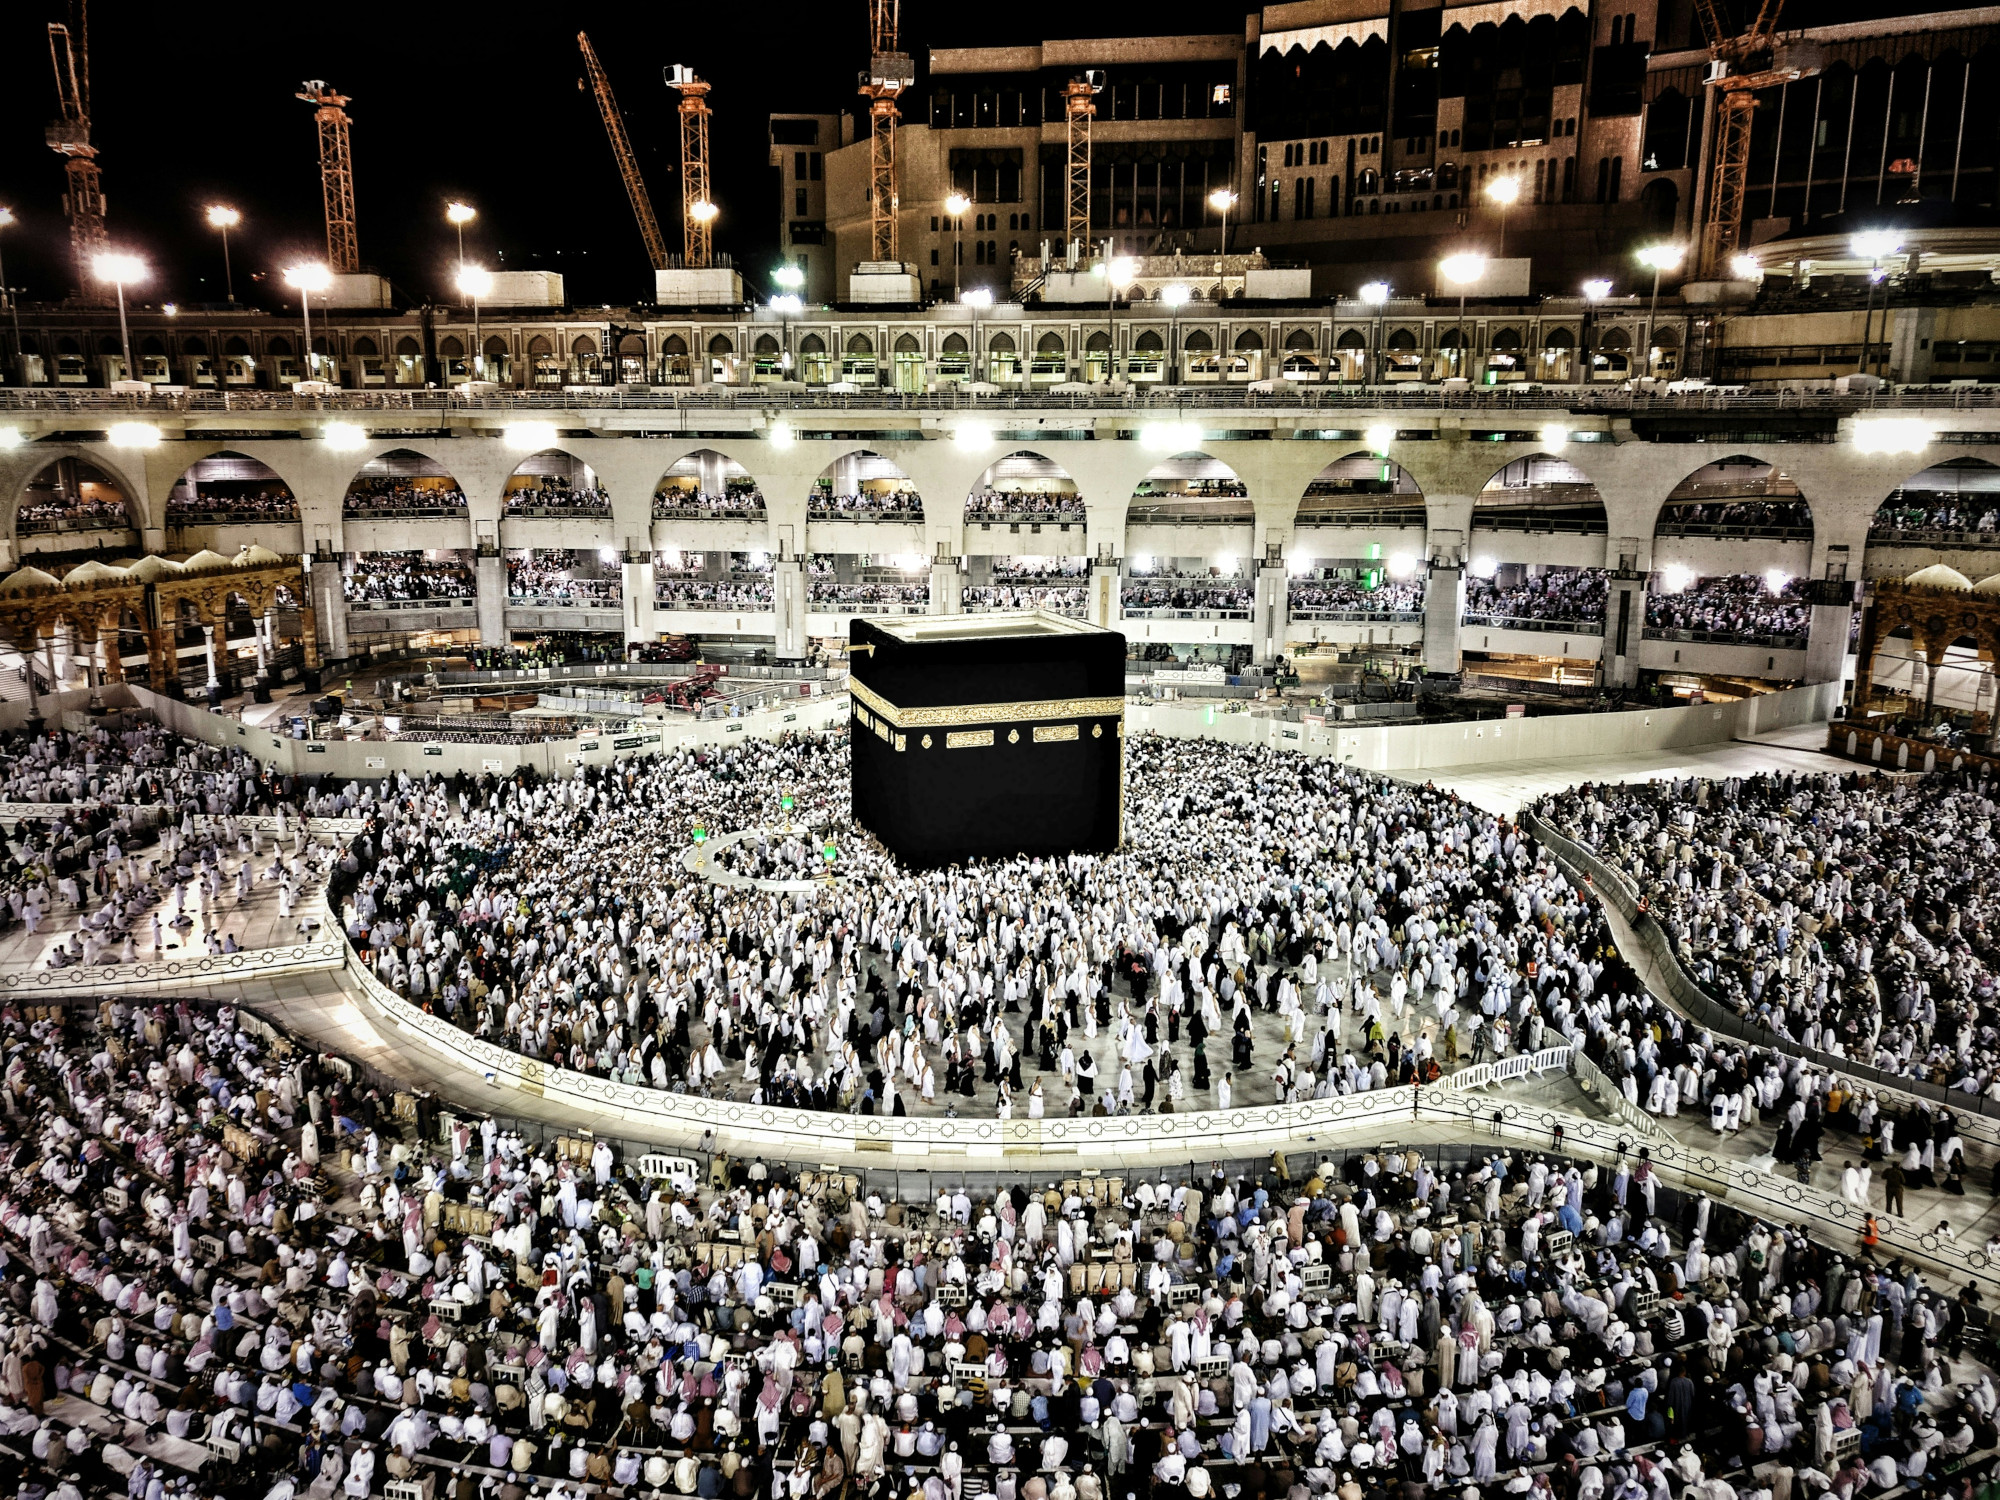 Berdosa mengerjakan haji tanpa permit – Mufti Besar Arab Saudi